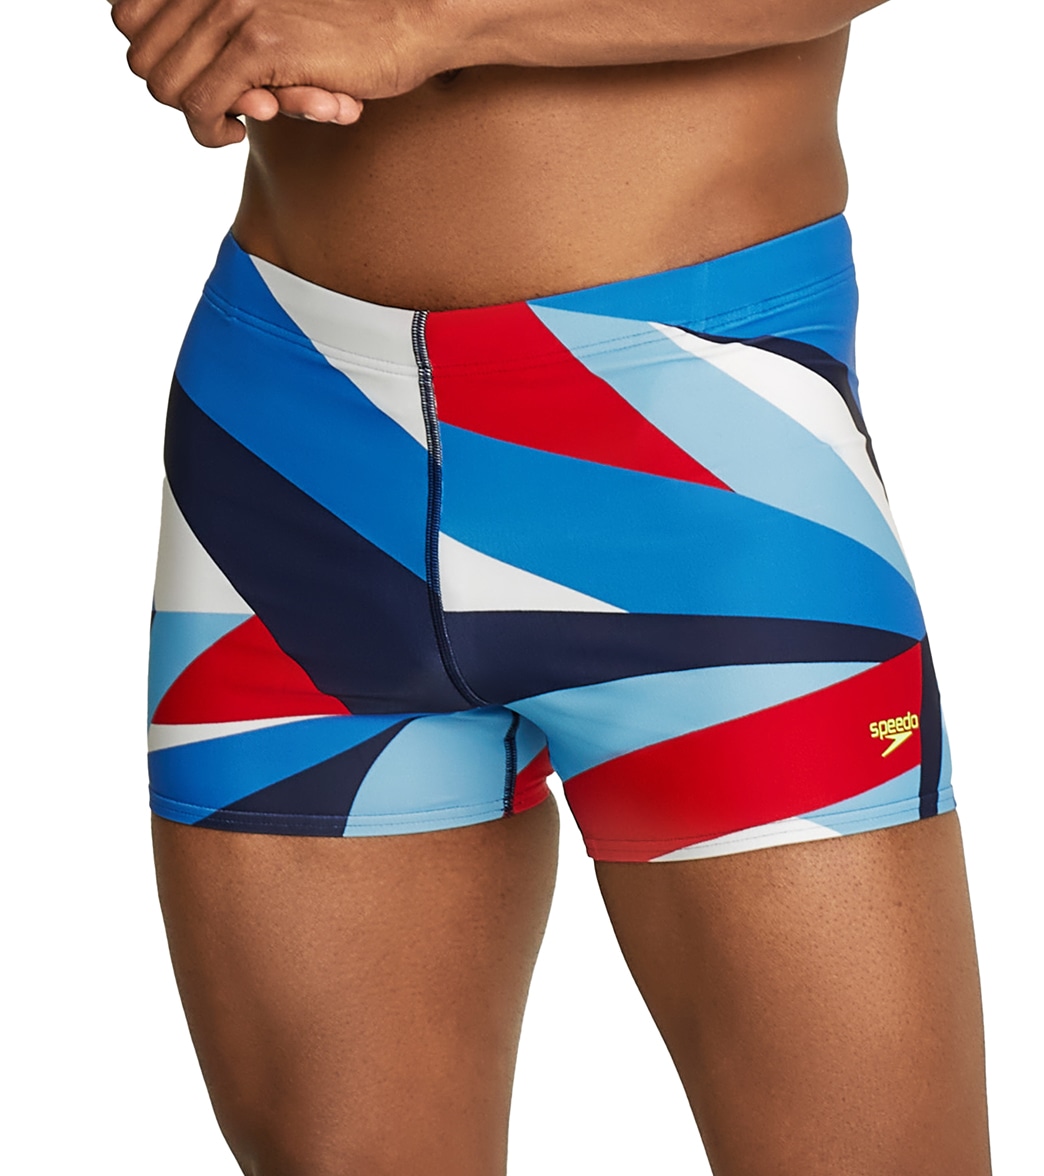 Speedo Men's Printed Square Leg Swimsuit - Red/White/Blue Medium - Swimoutlet.com